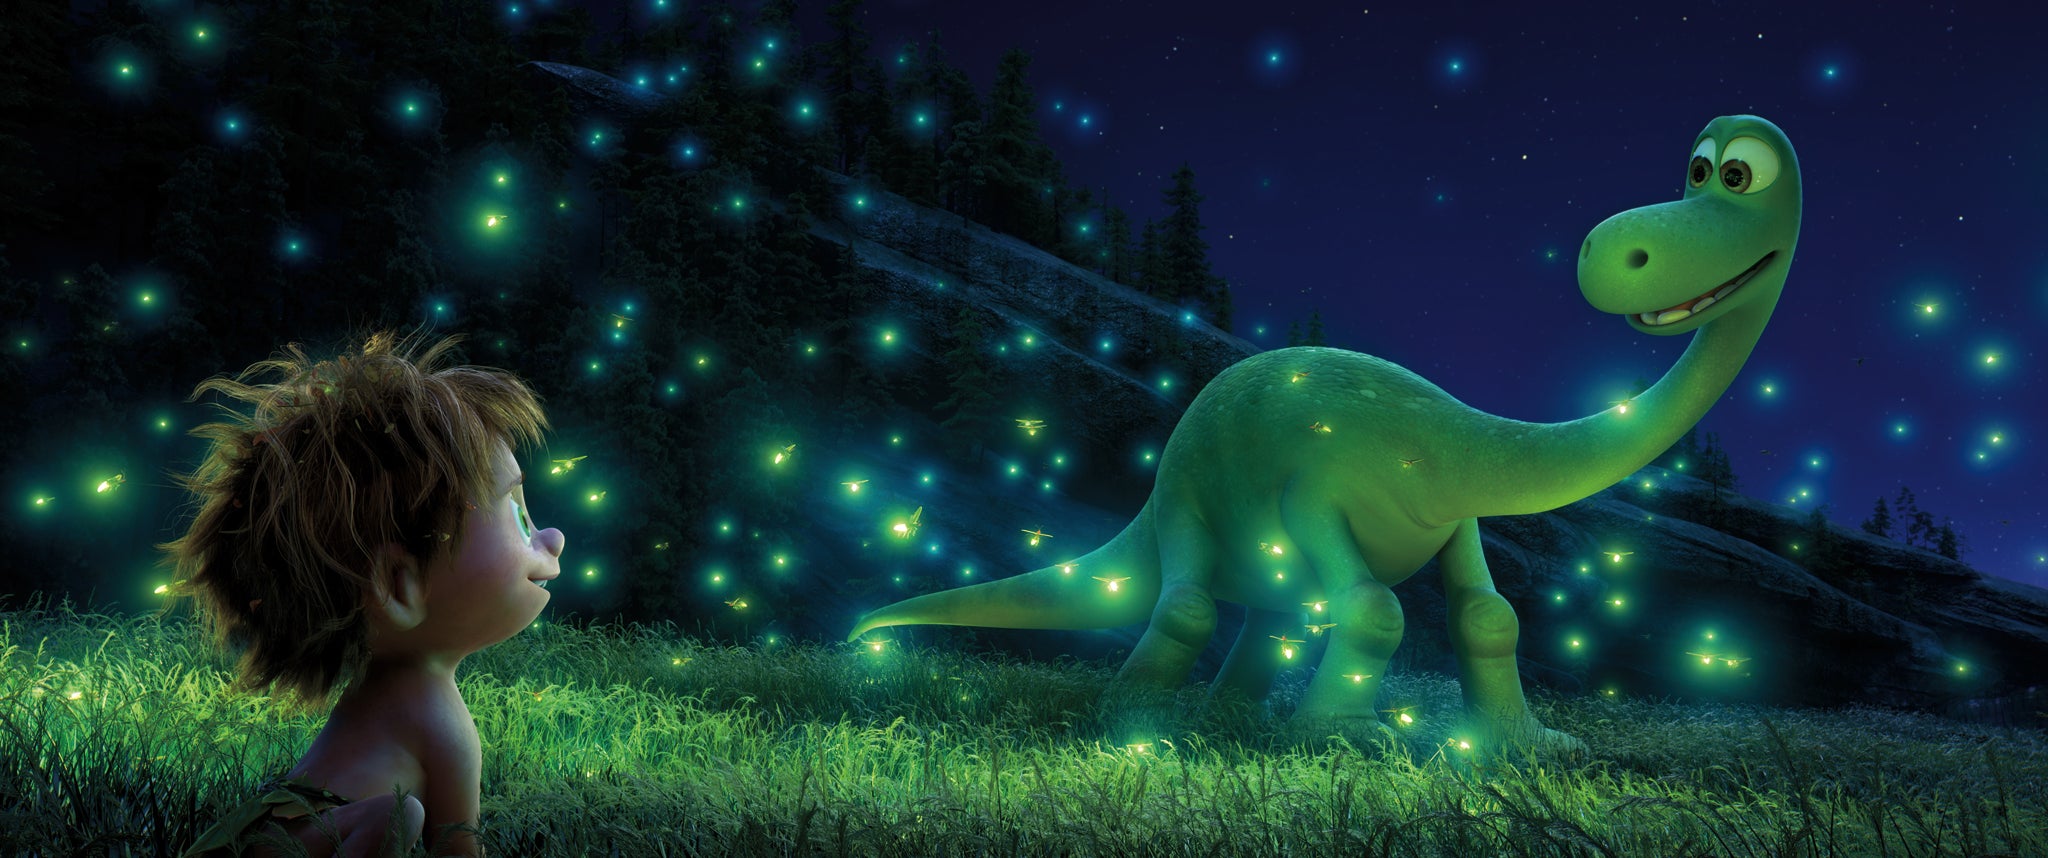 Disney Pixar's film The Good Dinosaur